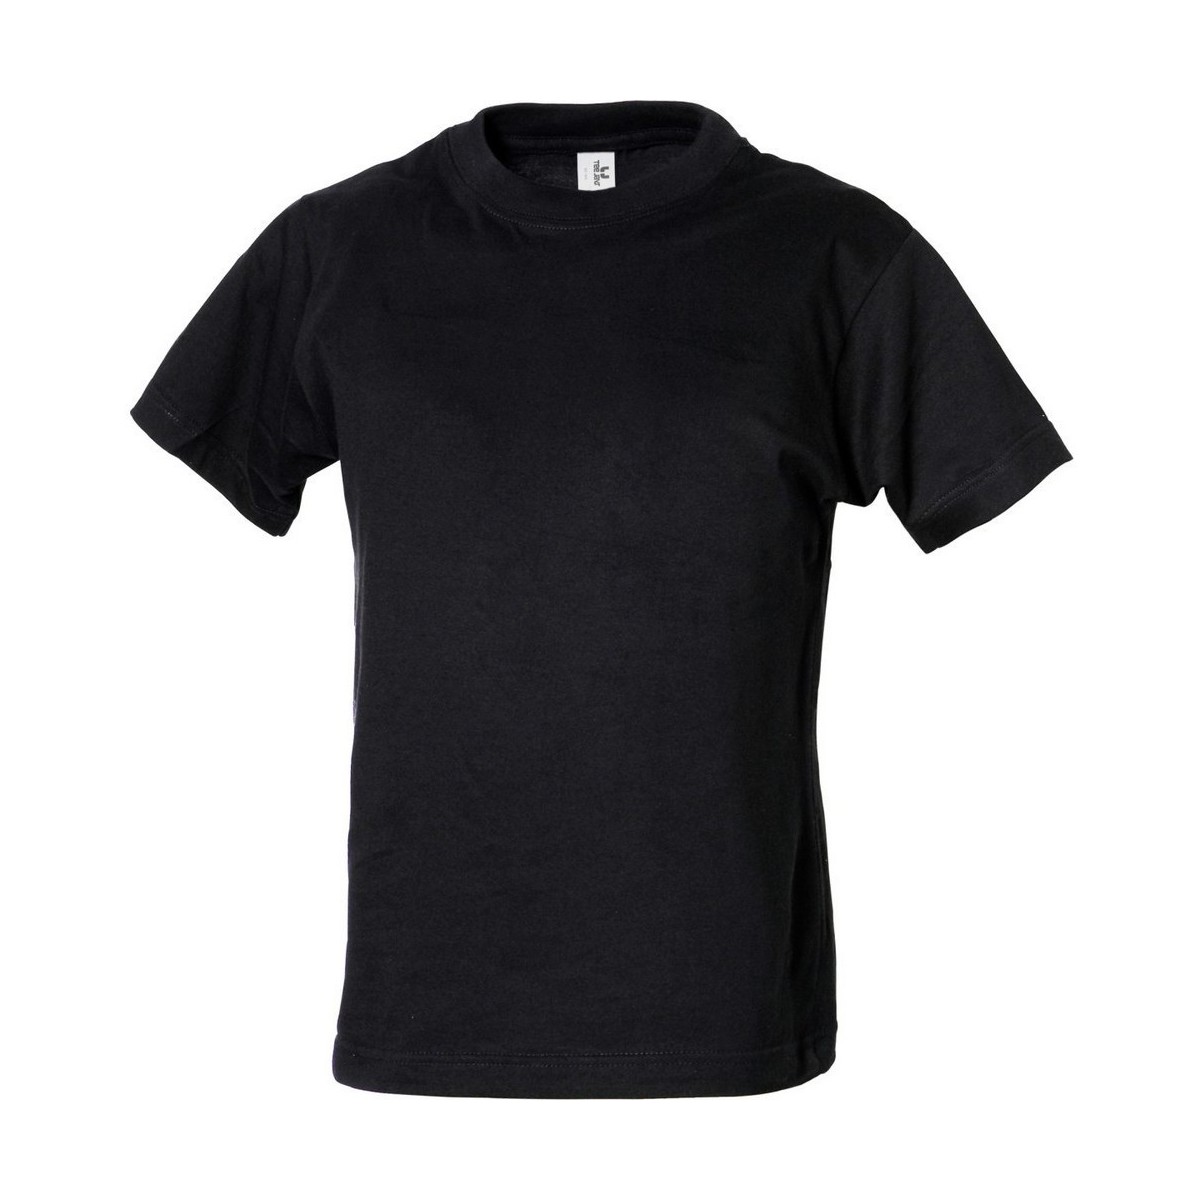 Abbigliamento Bambino T-shirt maniche corte Tee Jays Power Nero